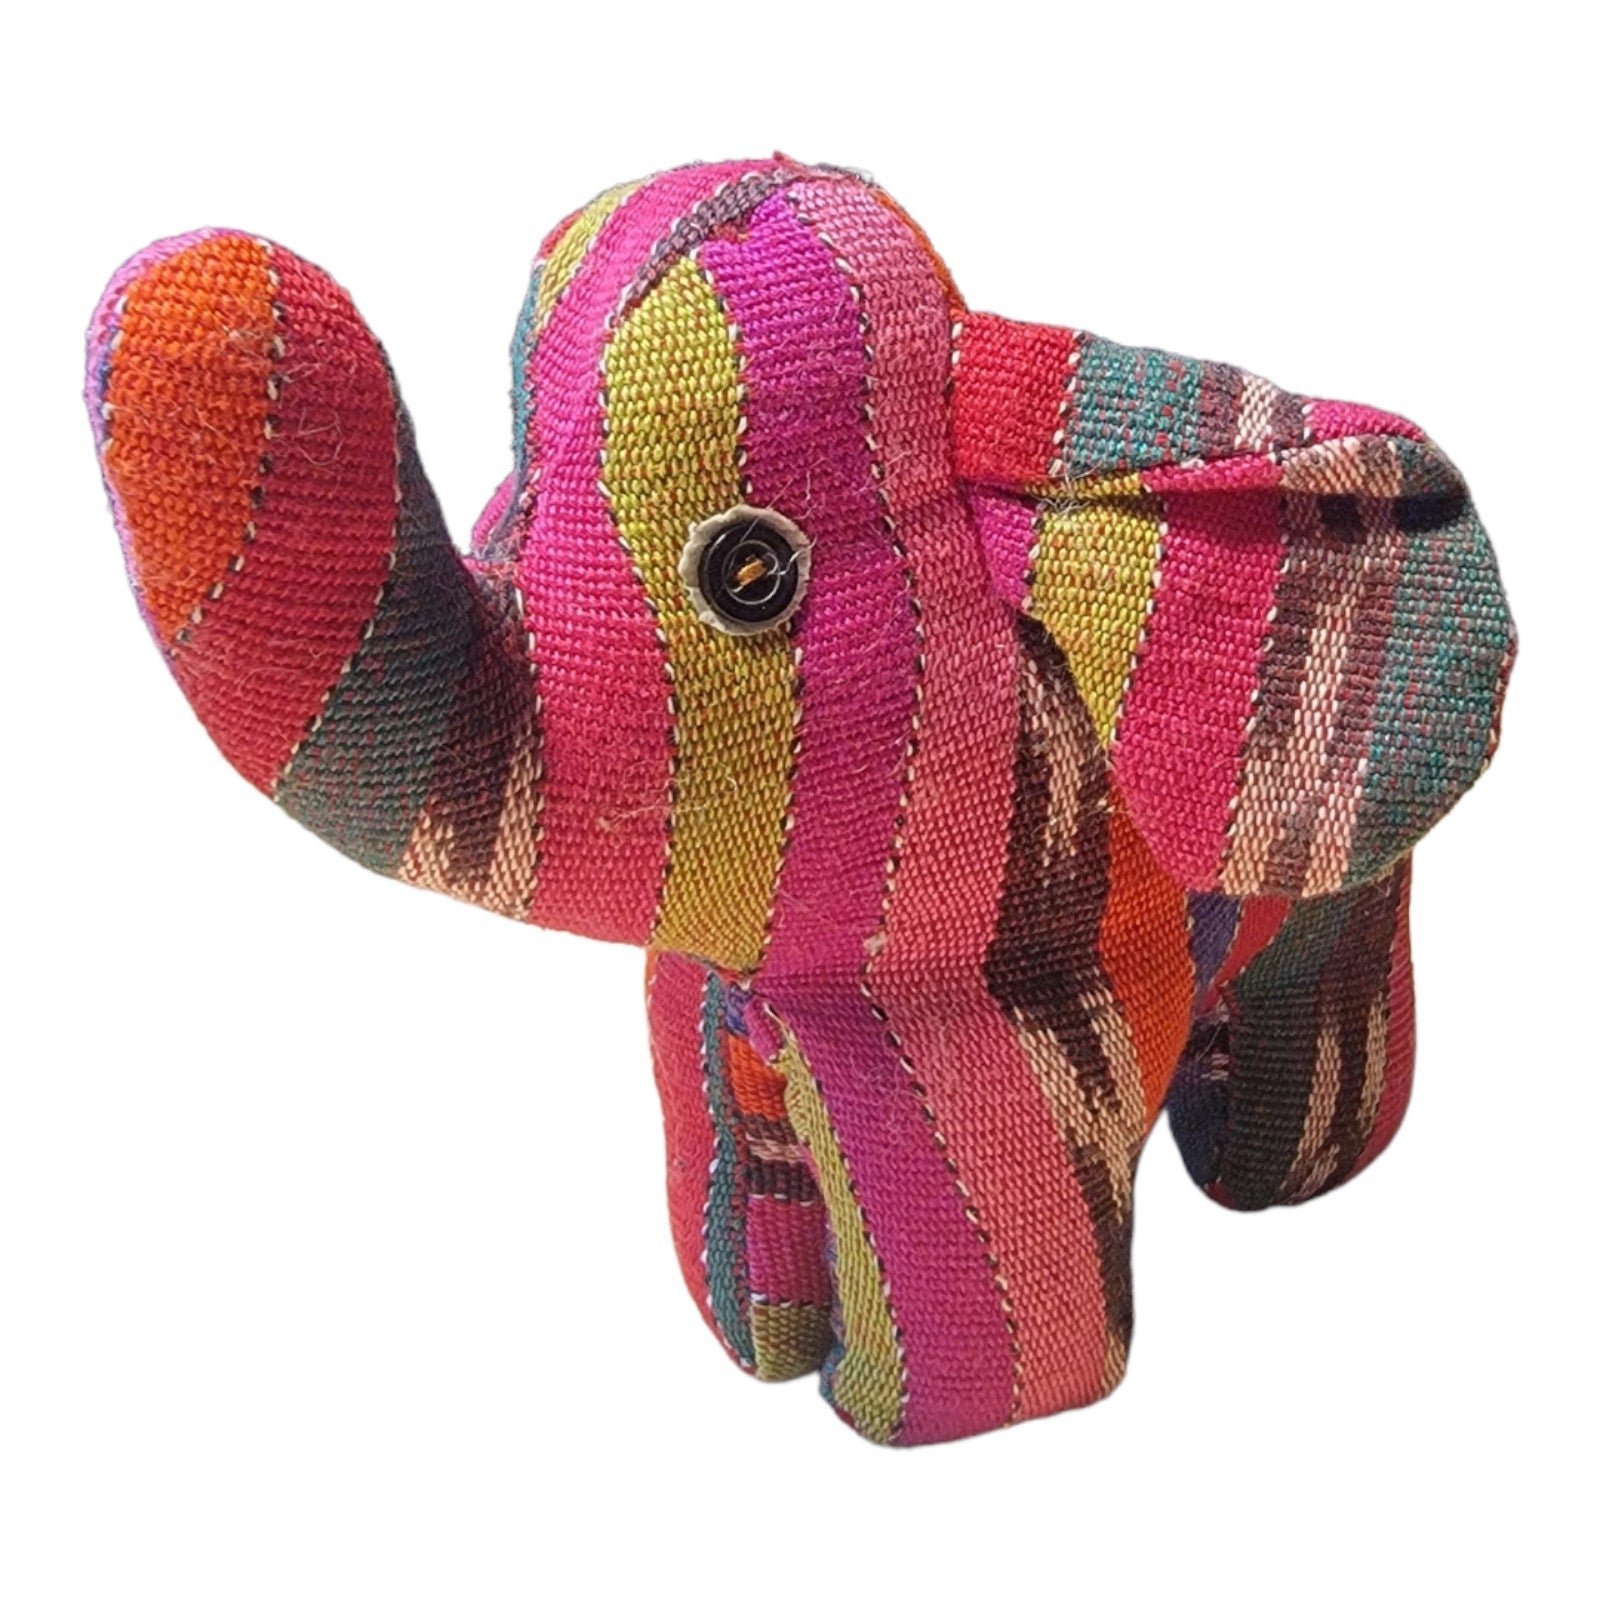 OOAK Handmade Guatemalan Fabric Lucky Elephant 53CJC8X8W